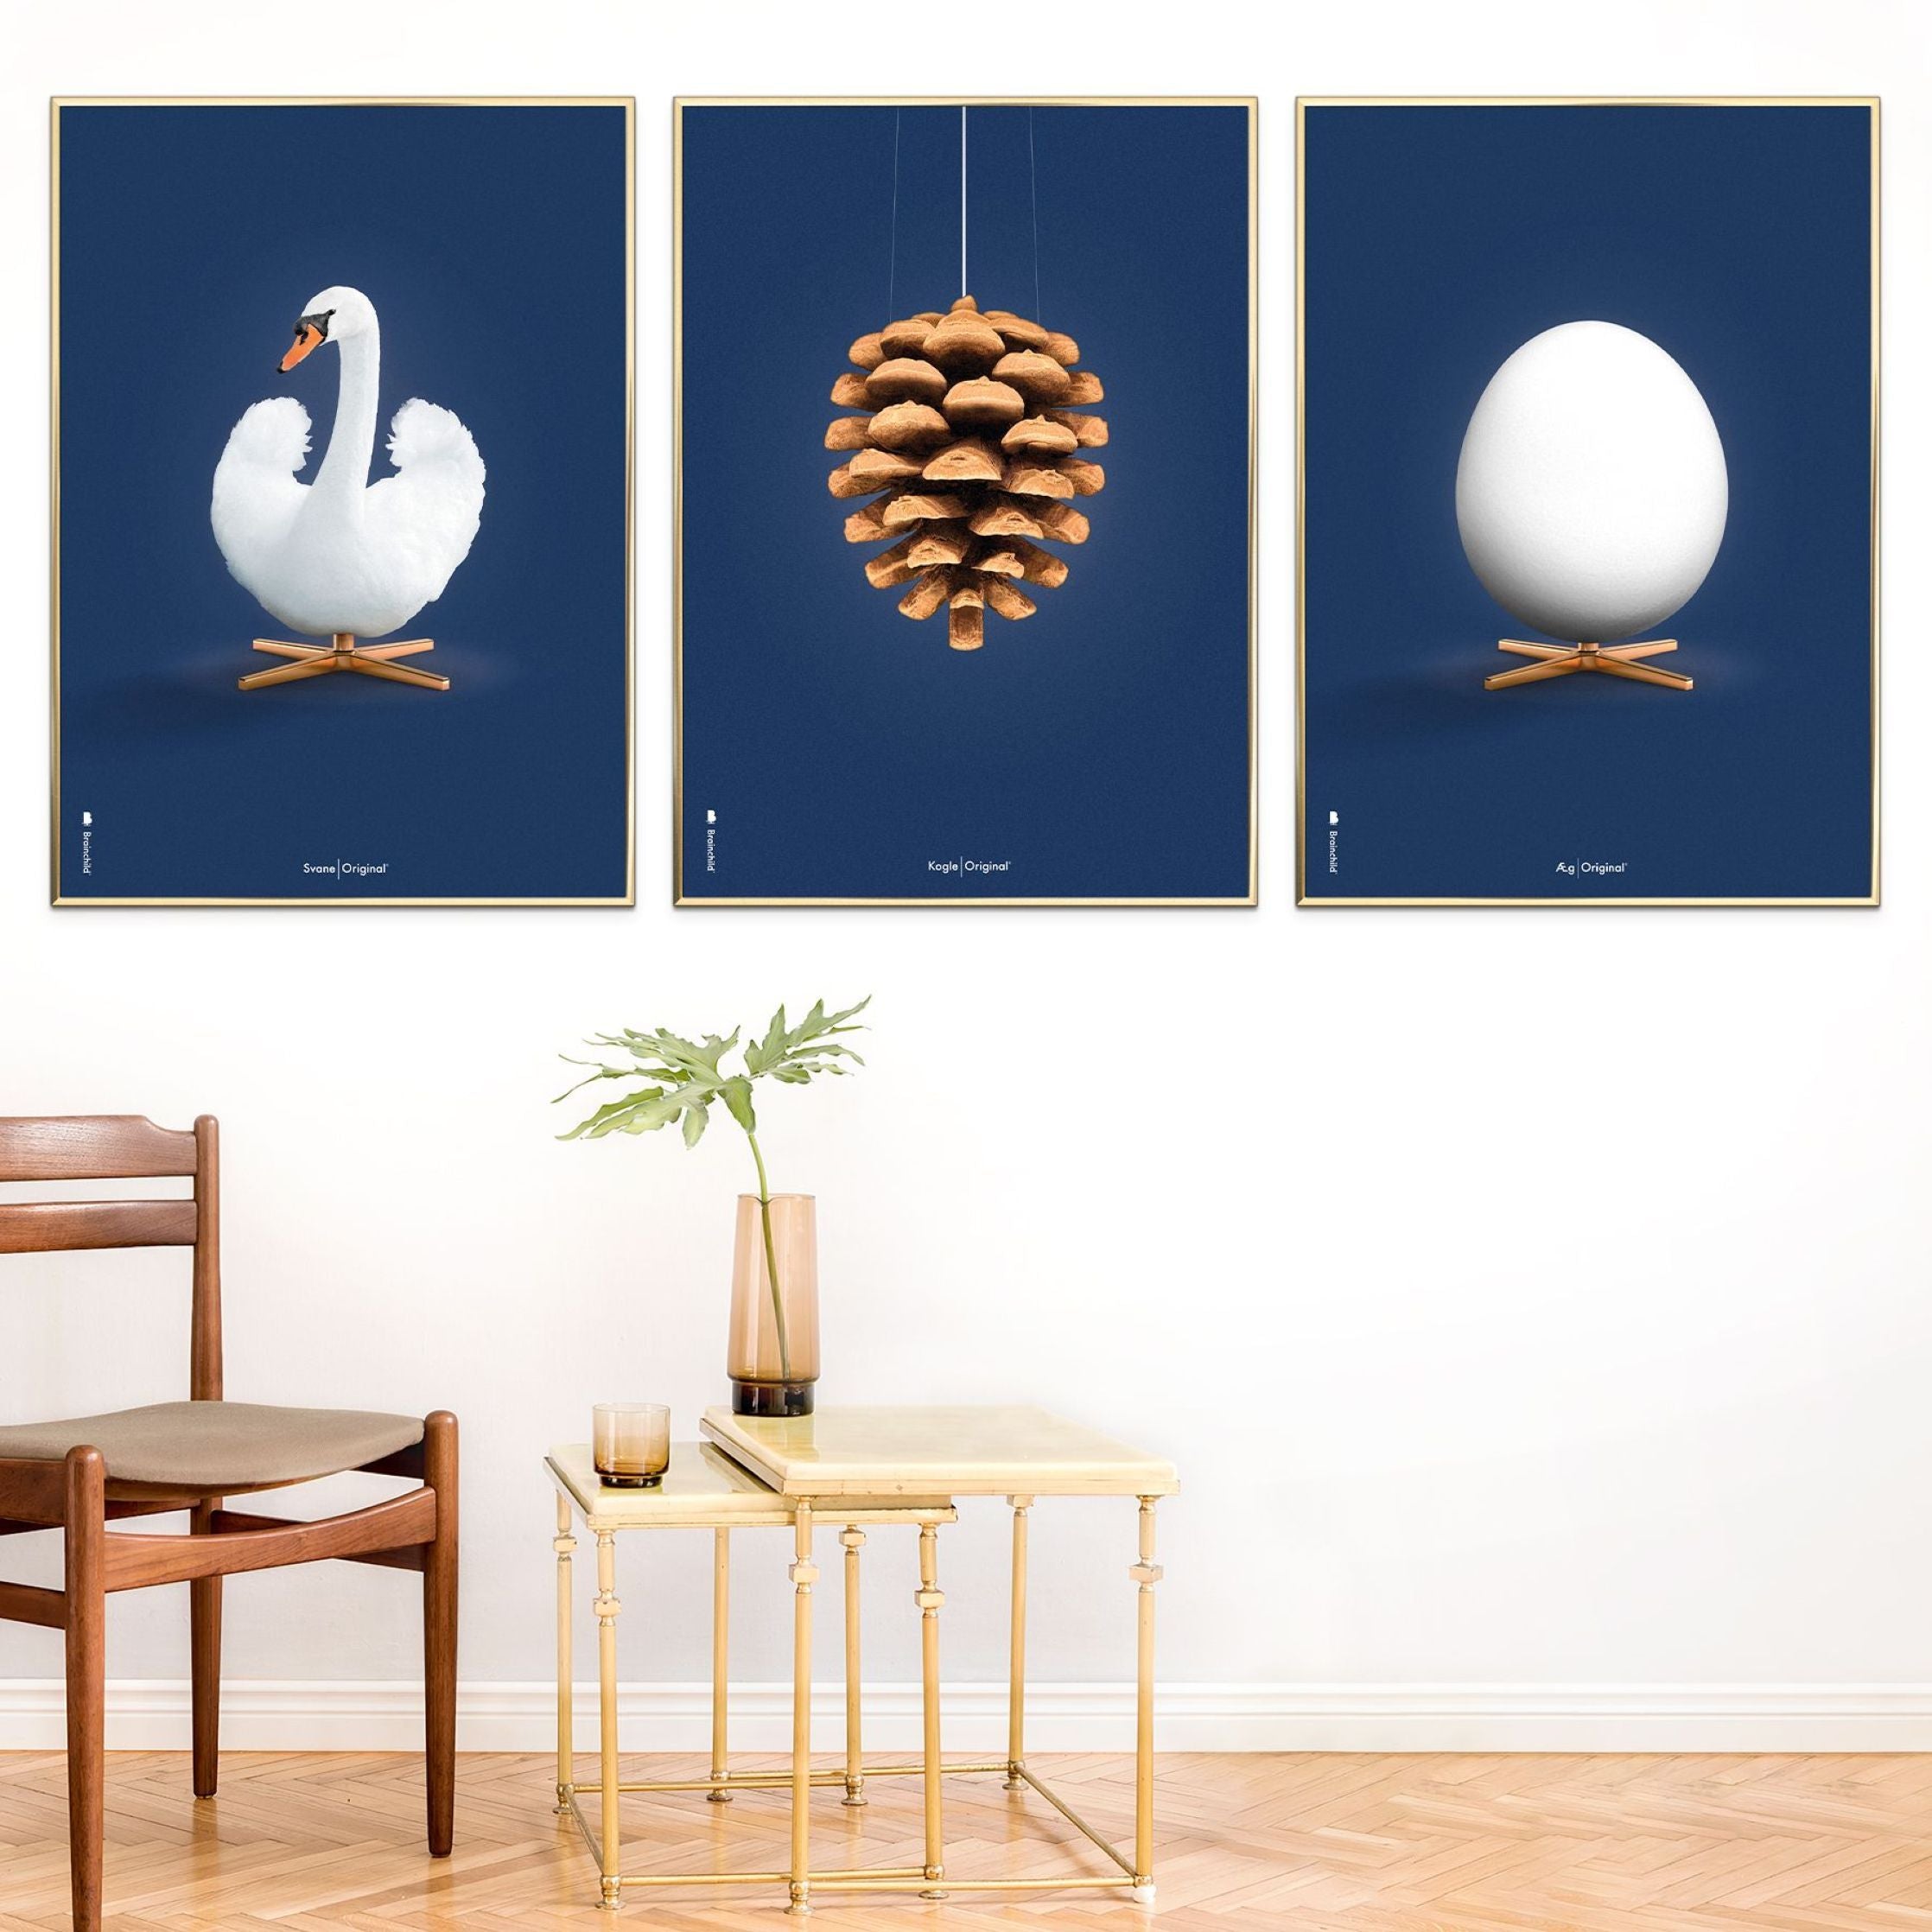 Brainchild Swan Classic Poster, Frame Made Of Light Wood 30x40 Cm, Dark Blue Background